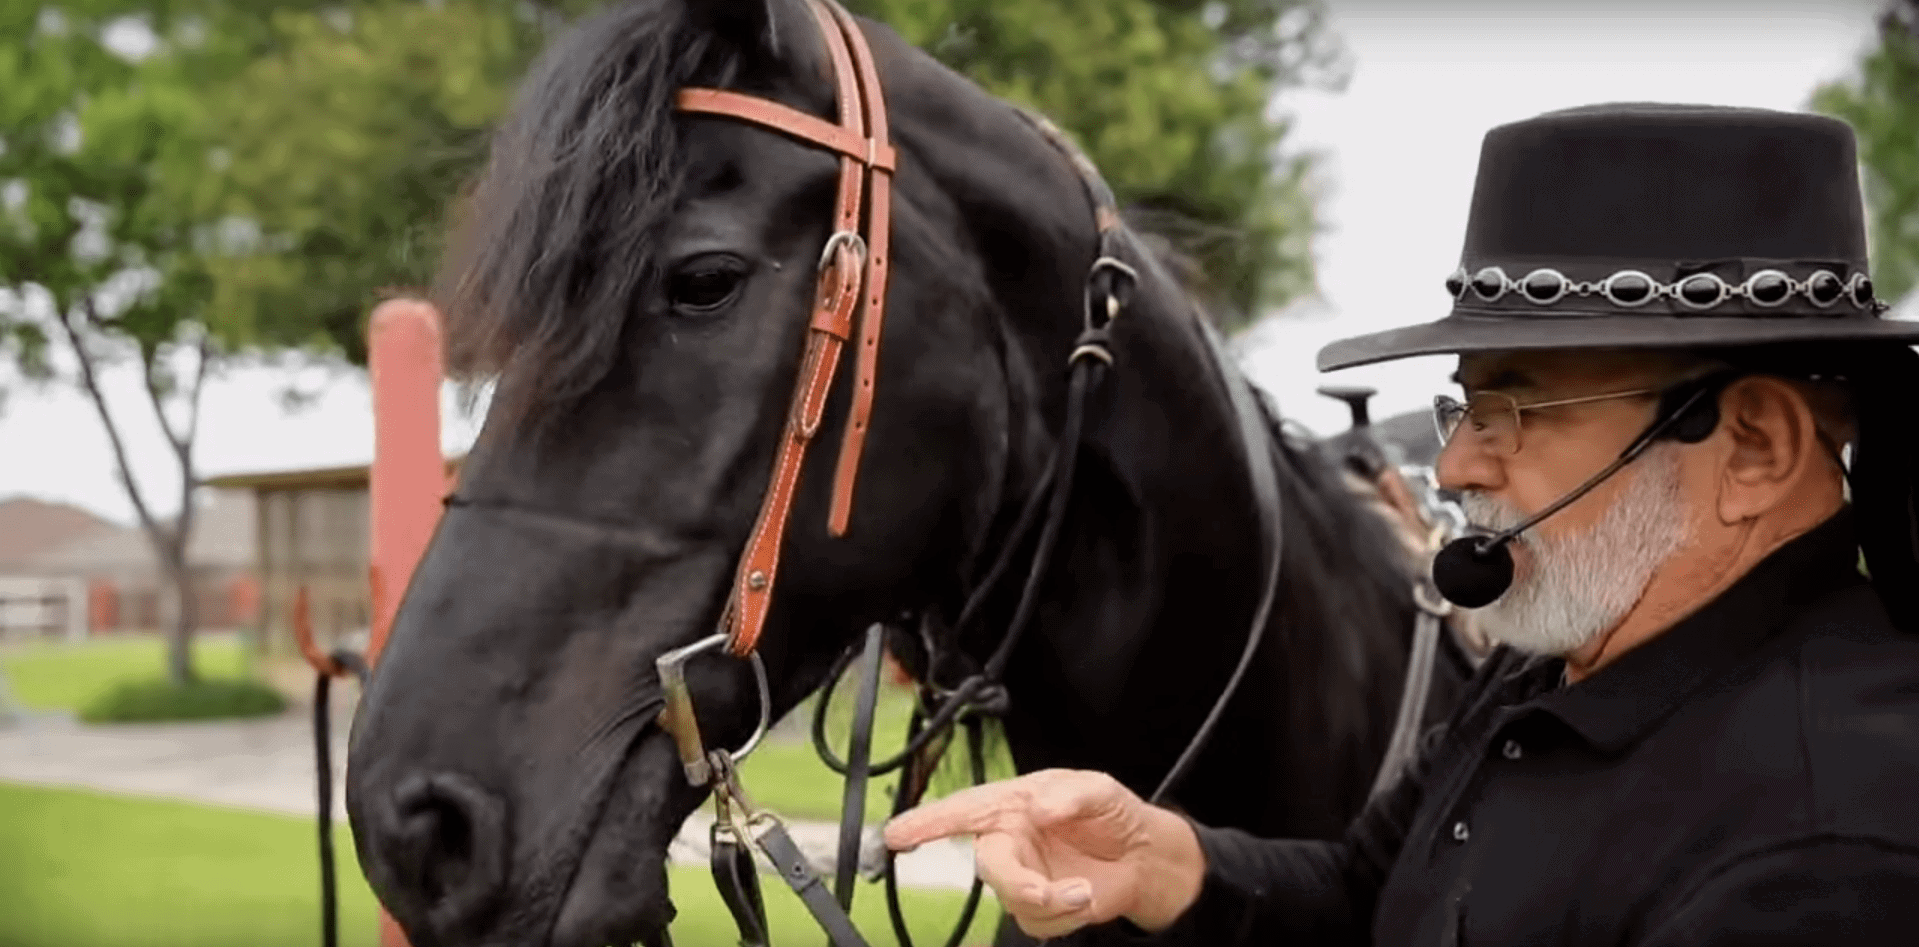 Al Ragusin beside a black horse